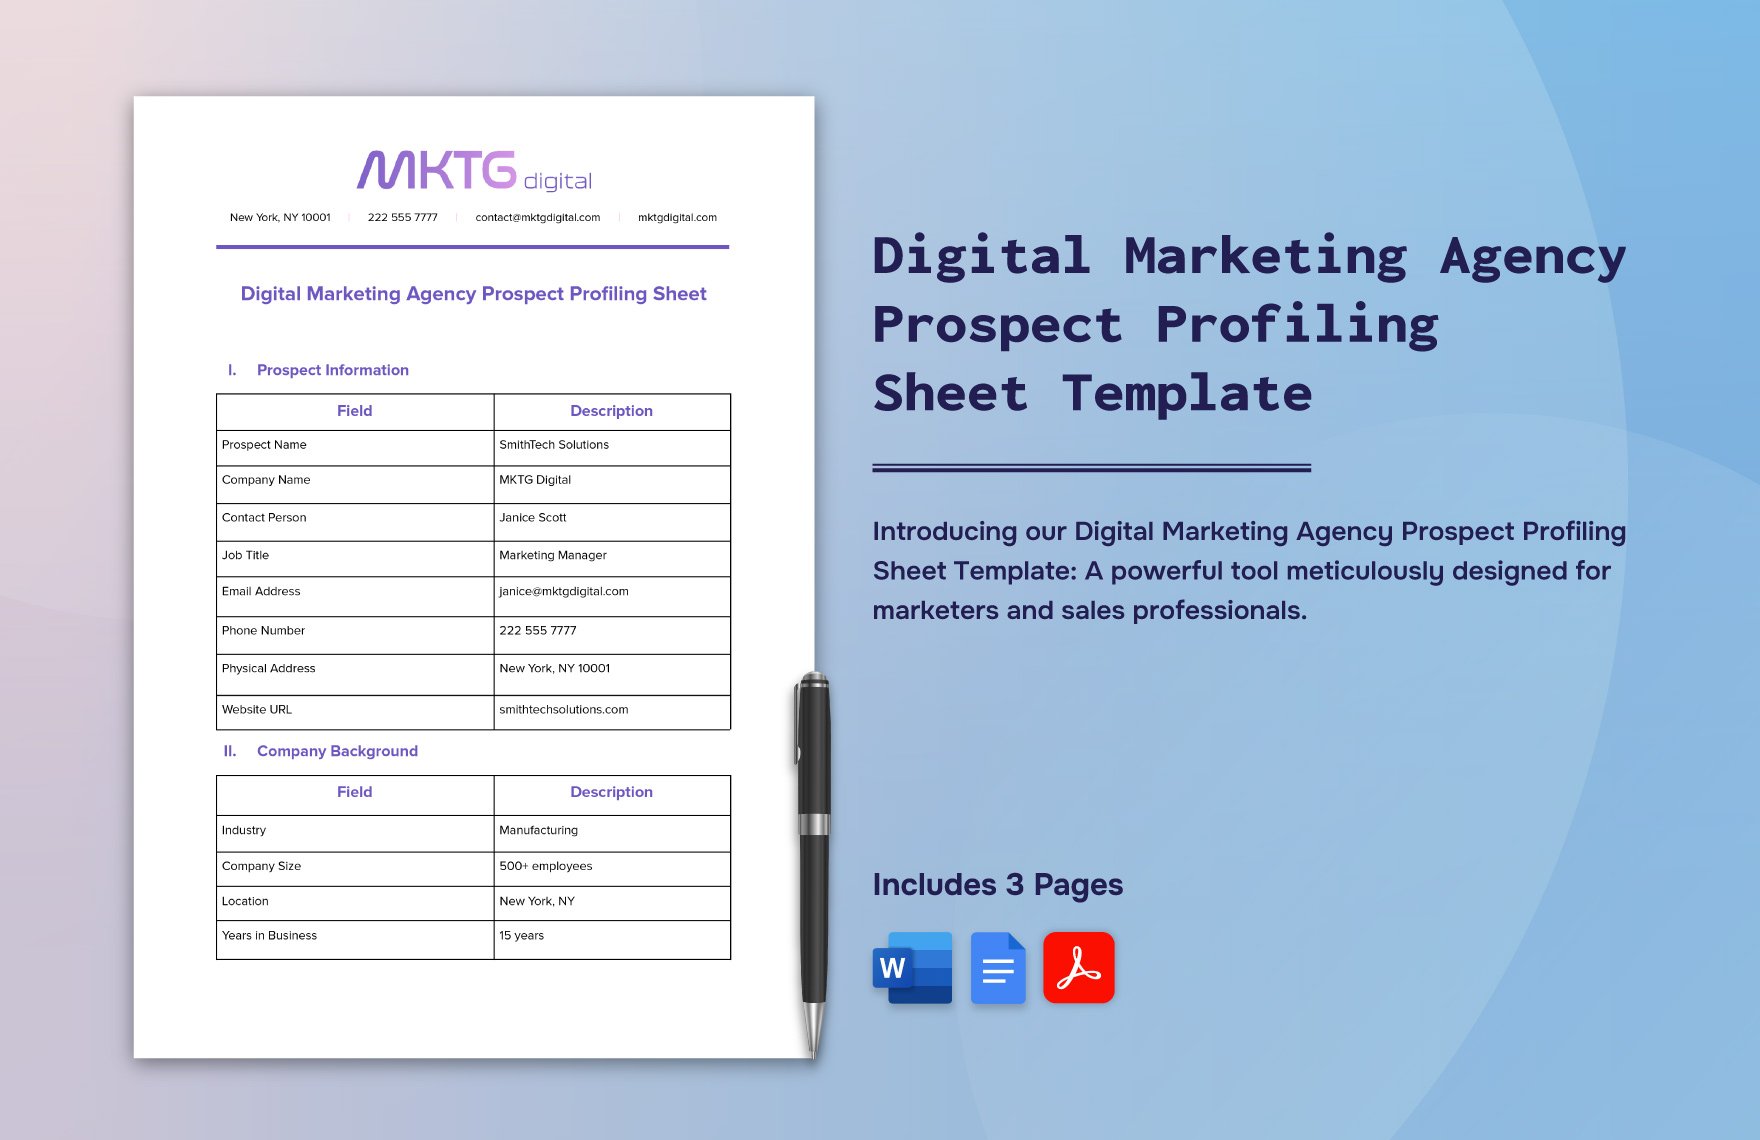 Digital Marketing Agency Prospect Profiling Sheet Template